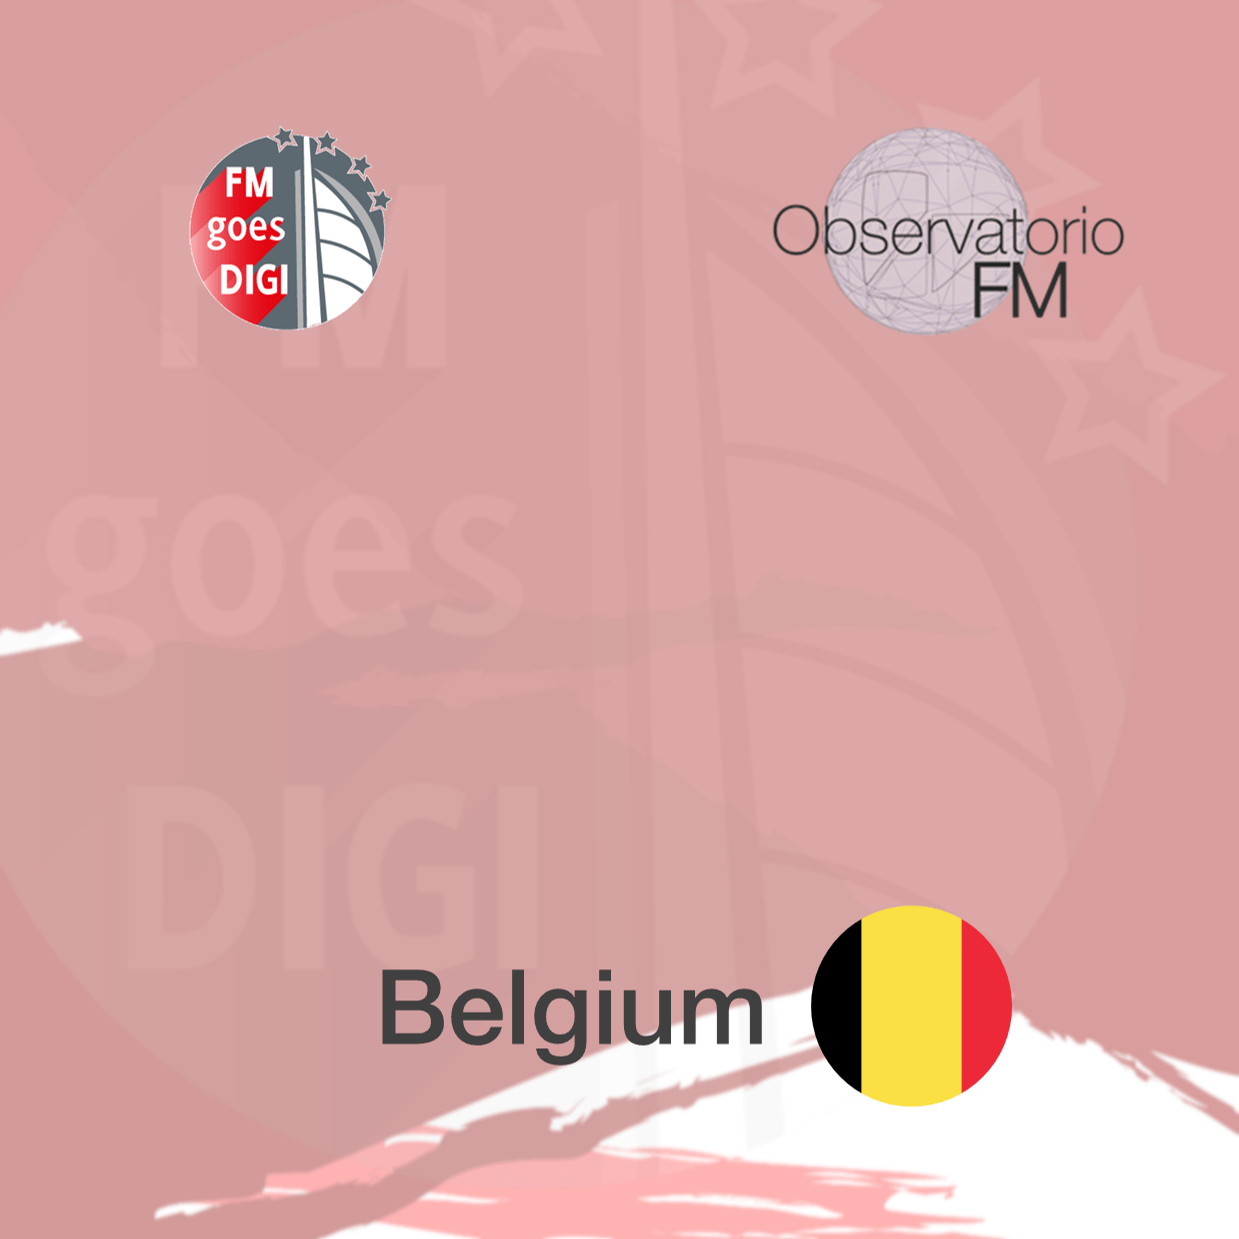 FMgoesDIGI_Belgium